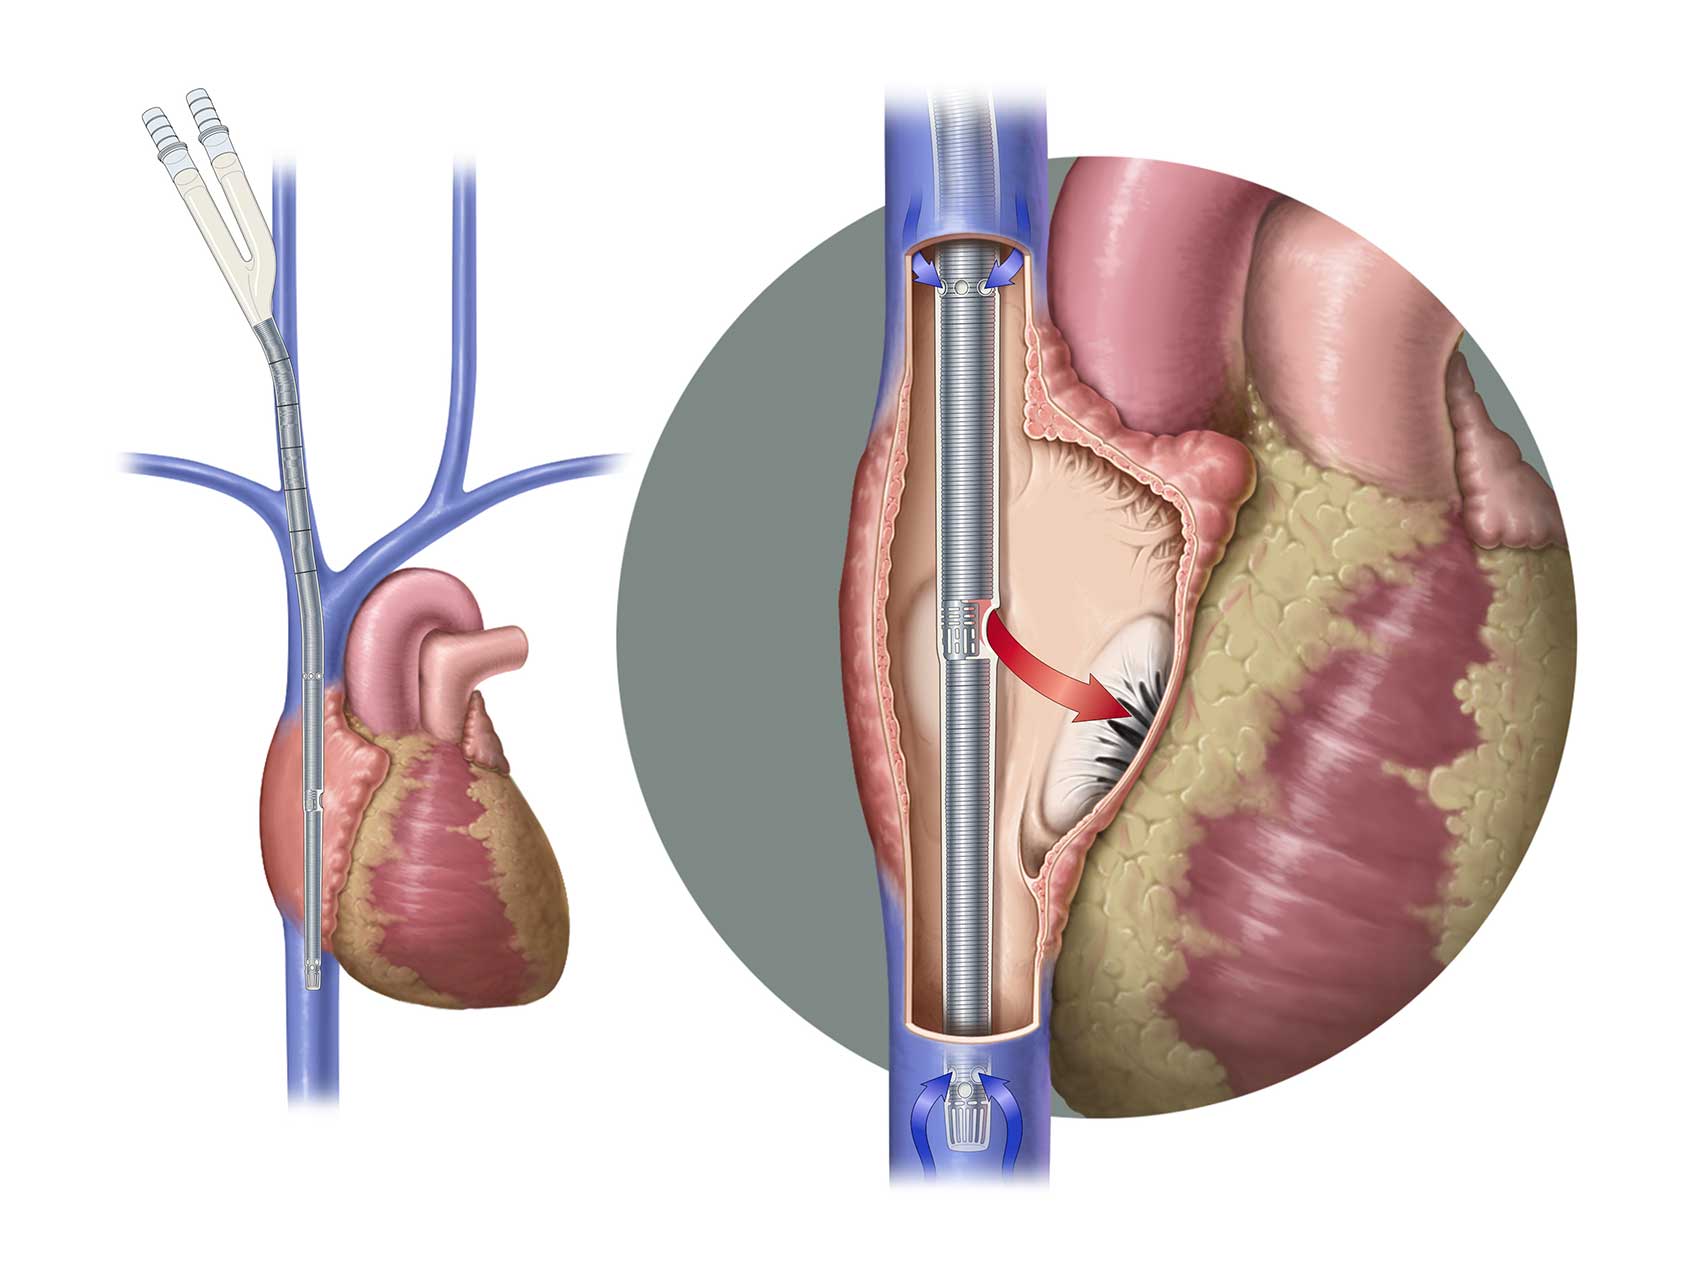 Avalon Elite Bi-Caval Dual-Lumen Catheter inserted into the patient’s internal jugular vein.